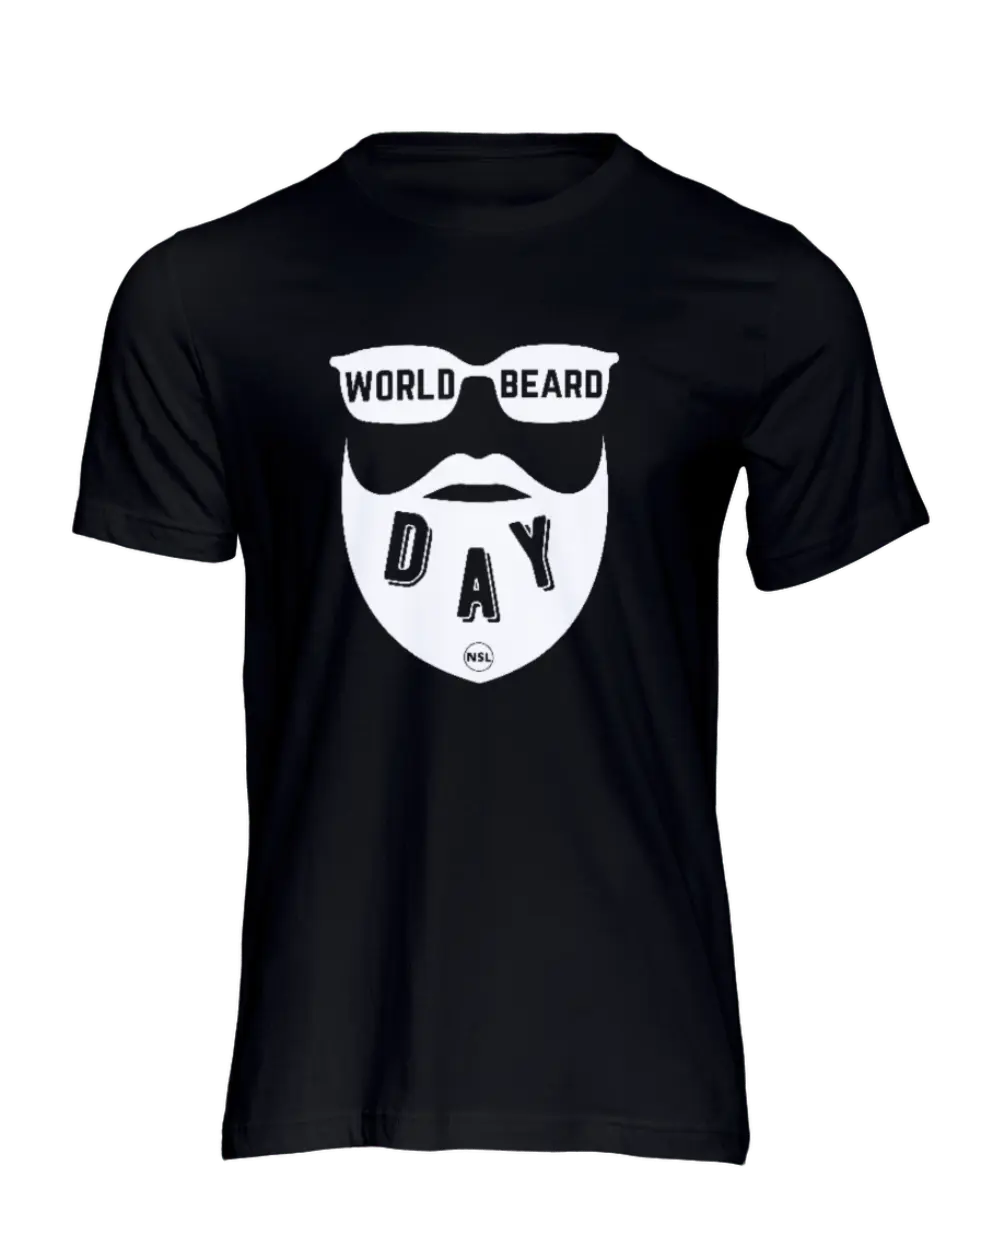 WORLD BEARD DAY Ver 4 Black Men's  T-Shirt|T-Shirt